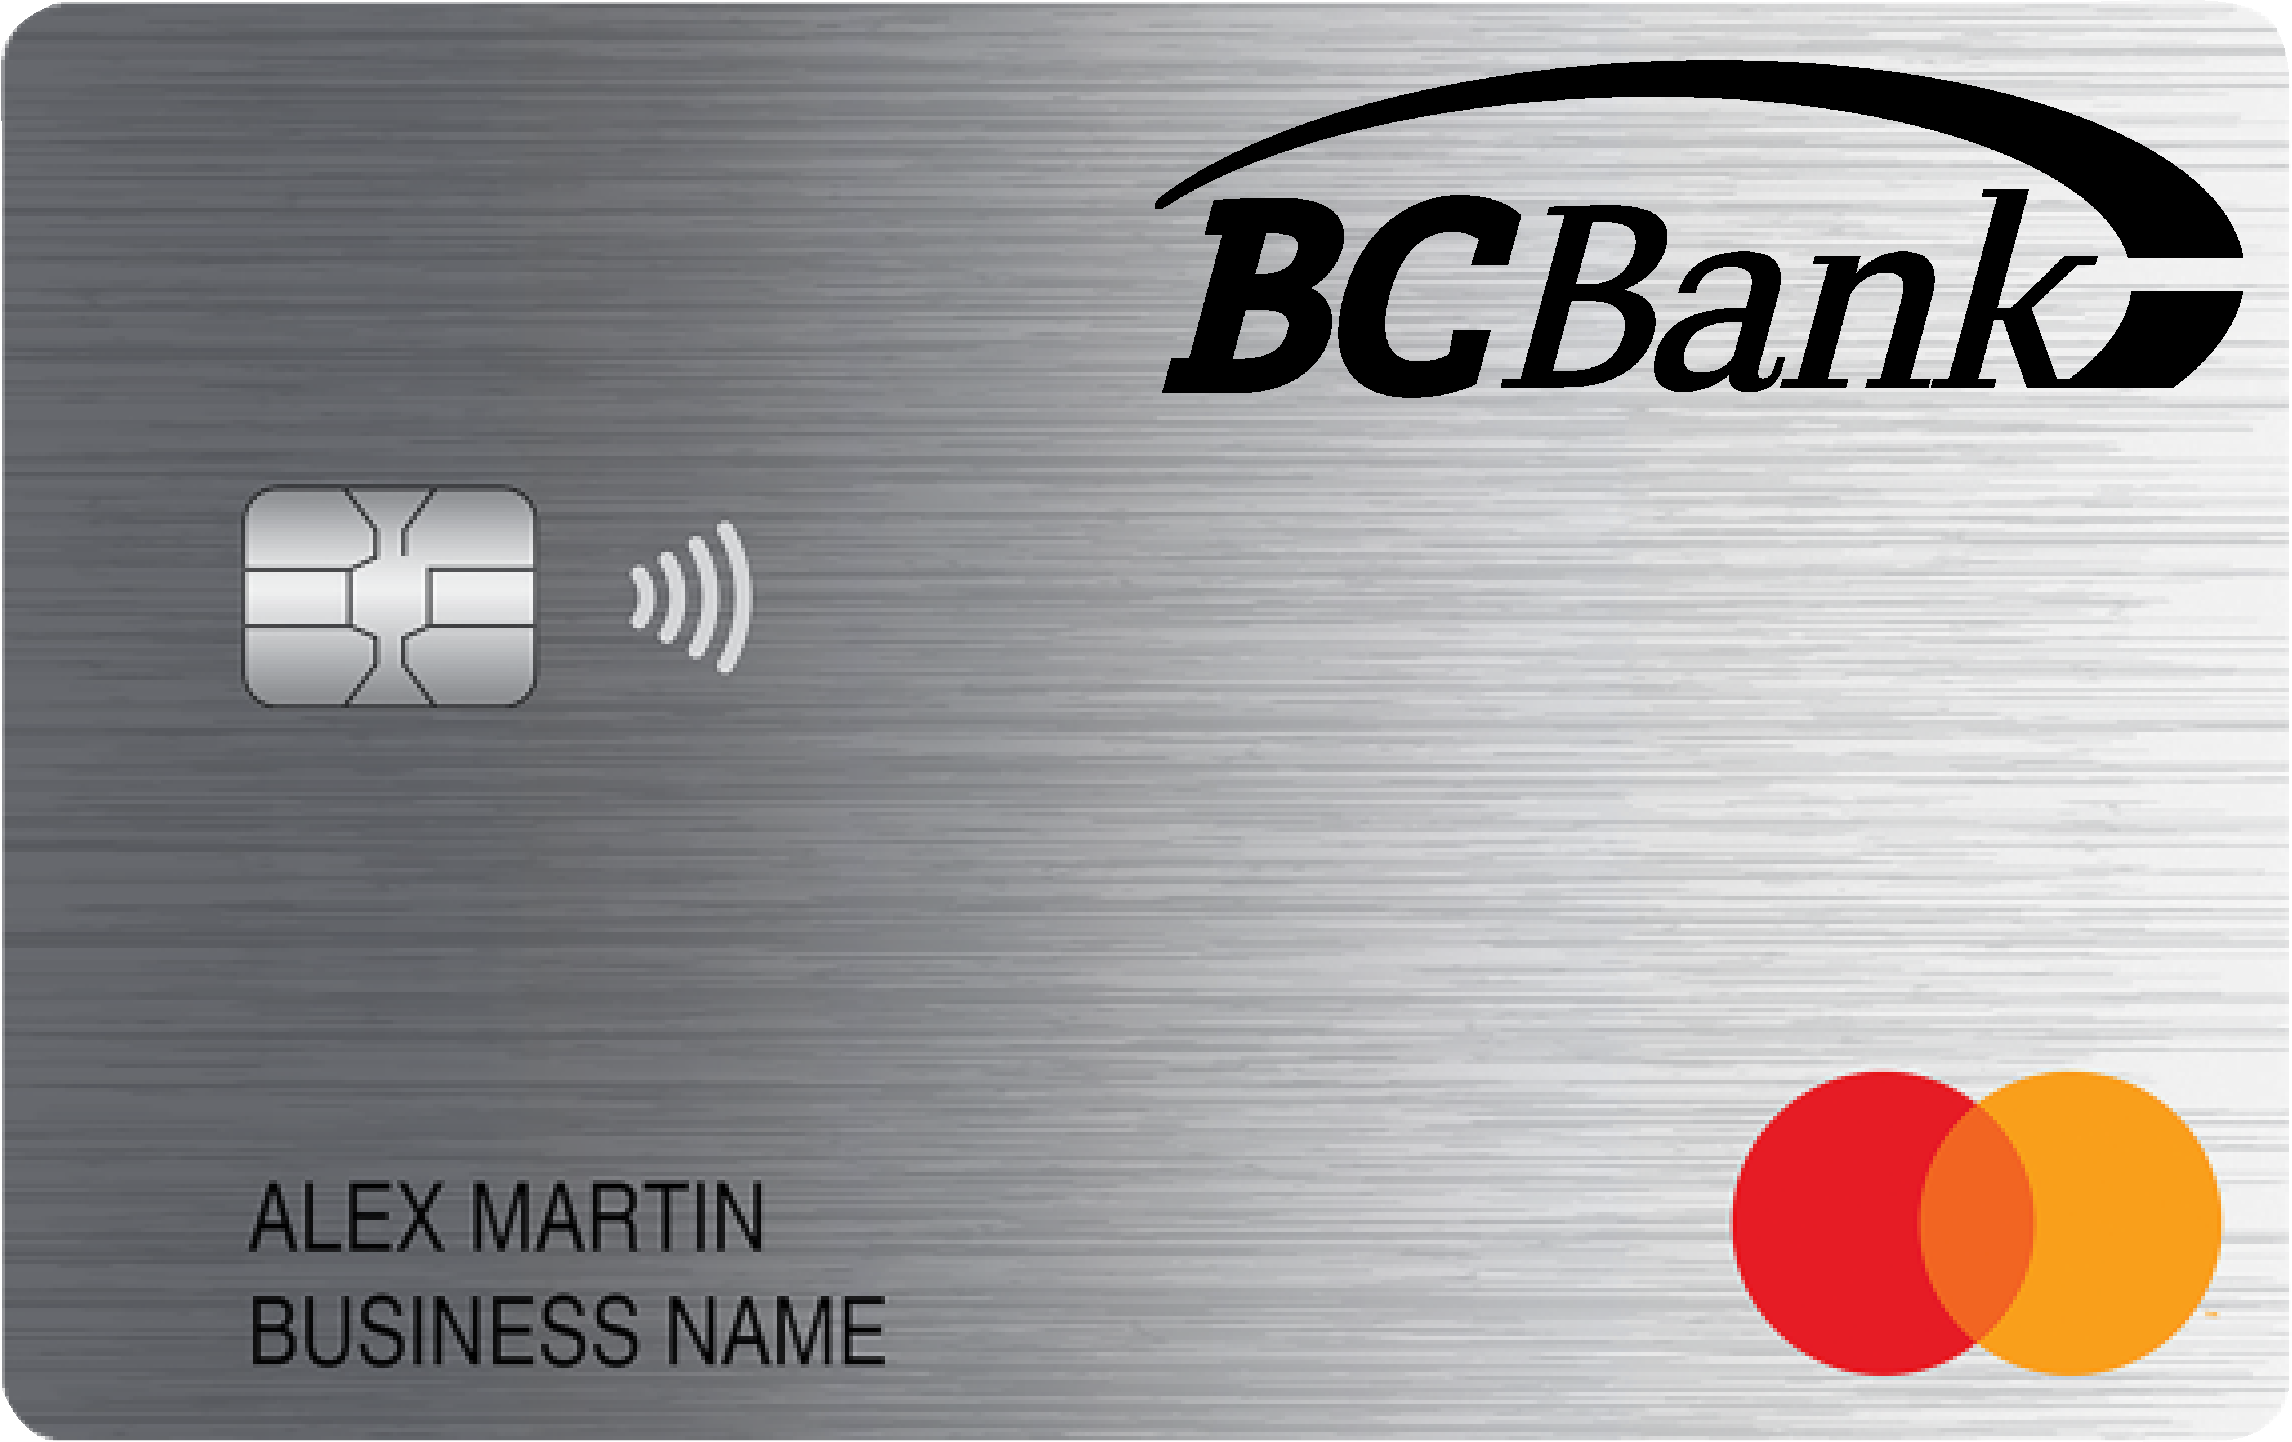 BCBank, Inc. Smart Business Rewards Card